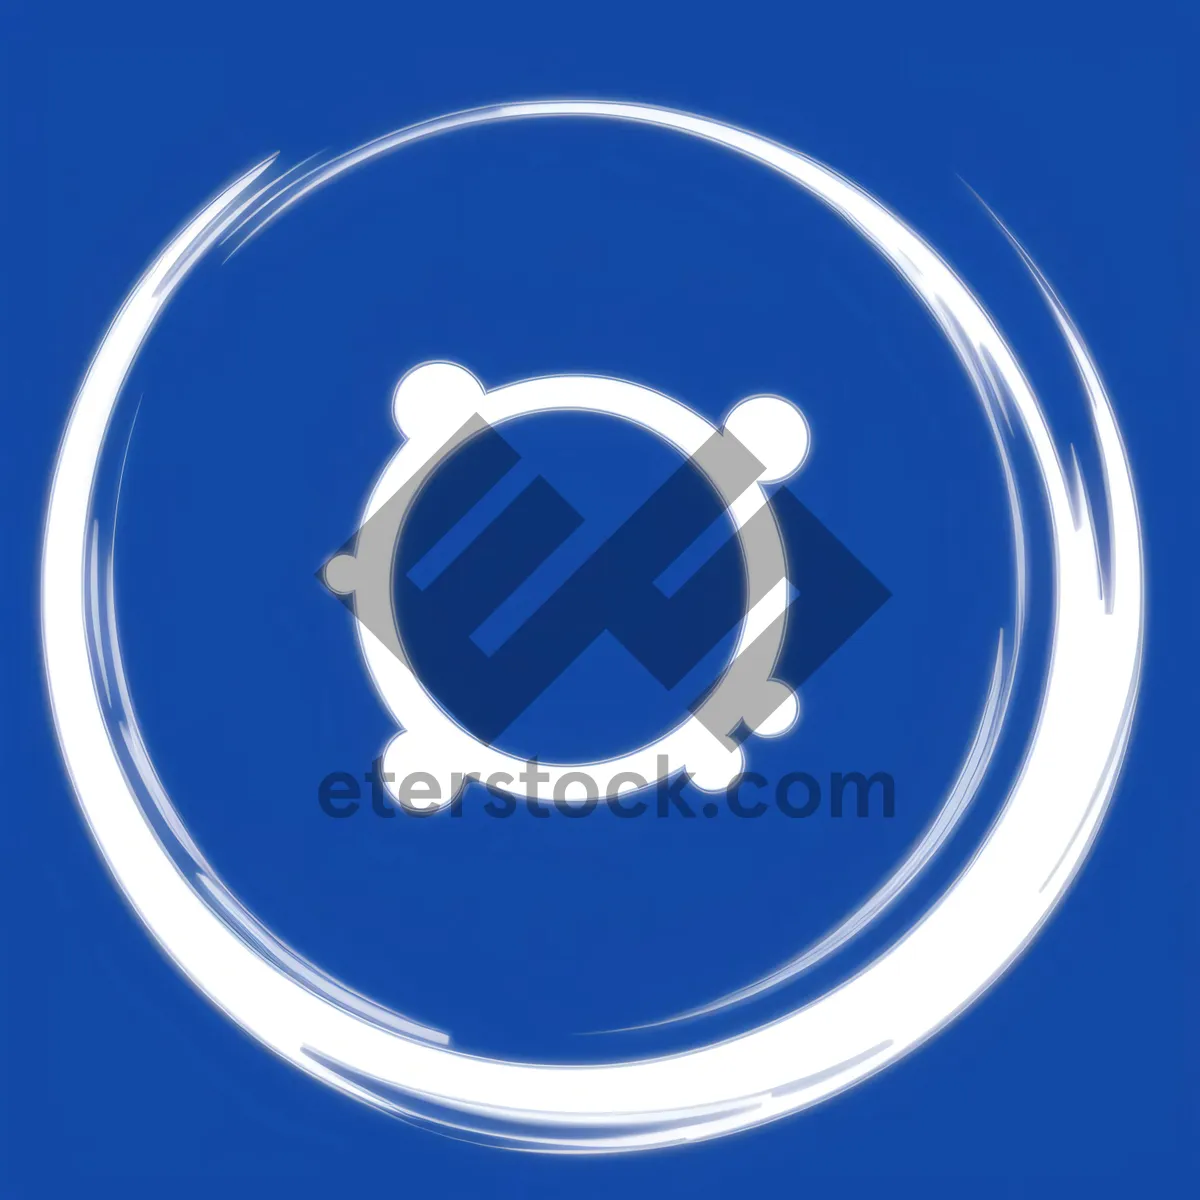 Picture of Round Aqua Button Set - Web Symbol Icons